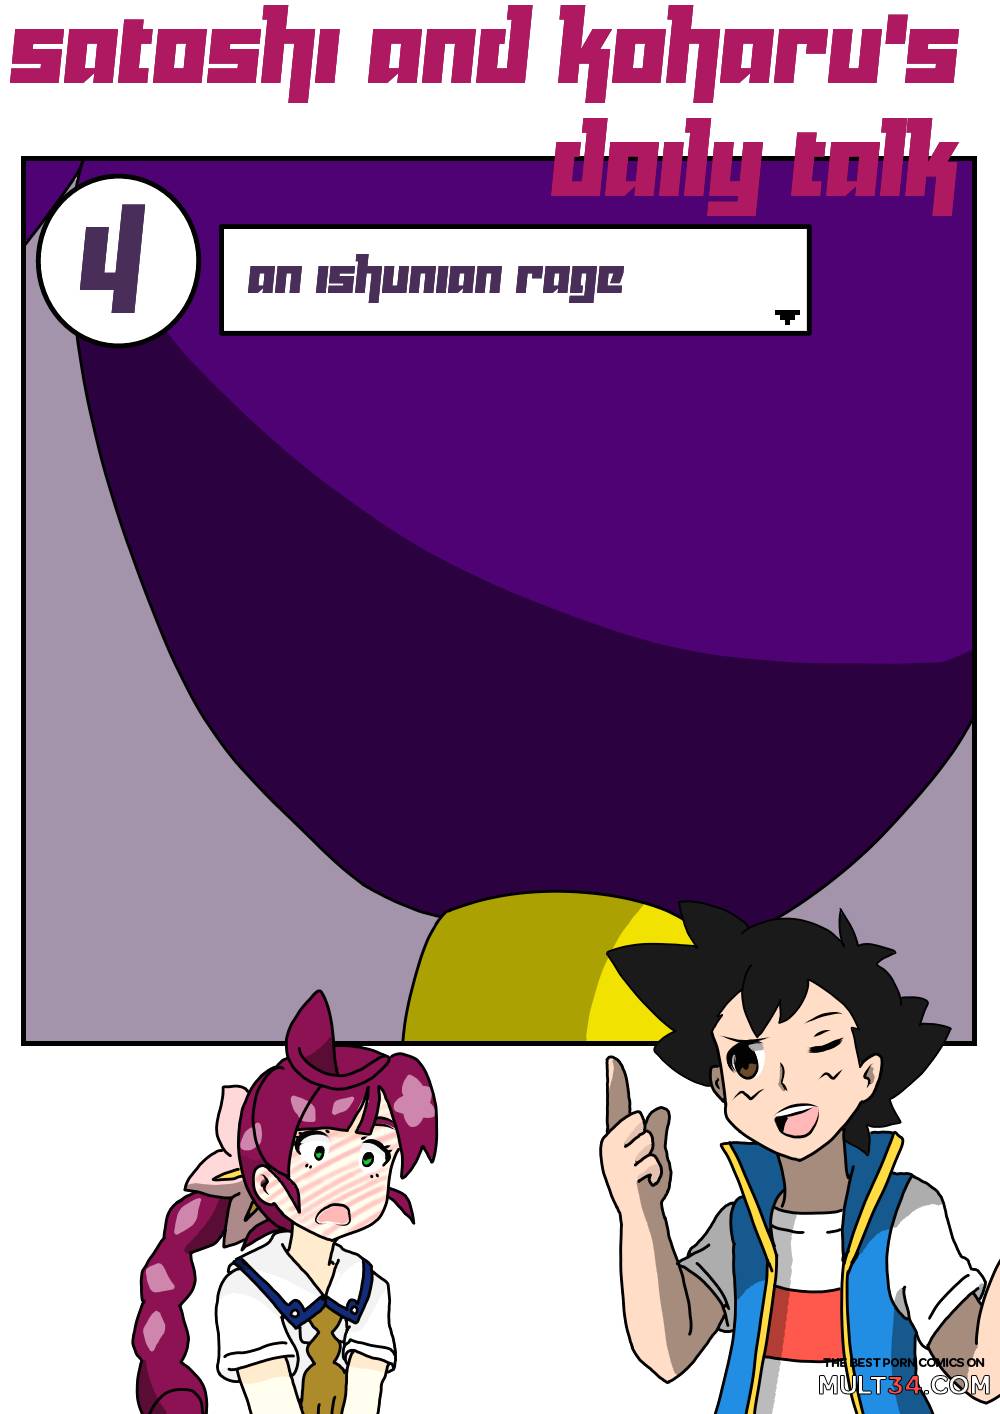 Satoshi and Koharu's Daily talk 4 page 1